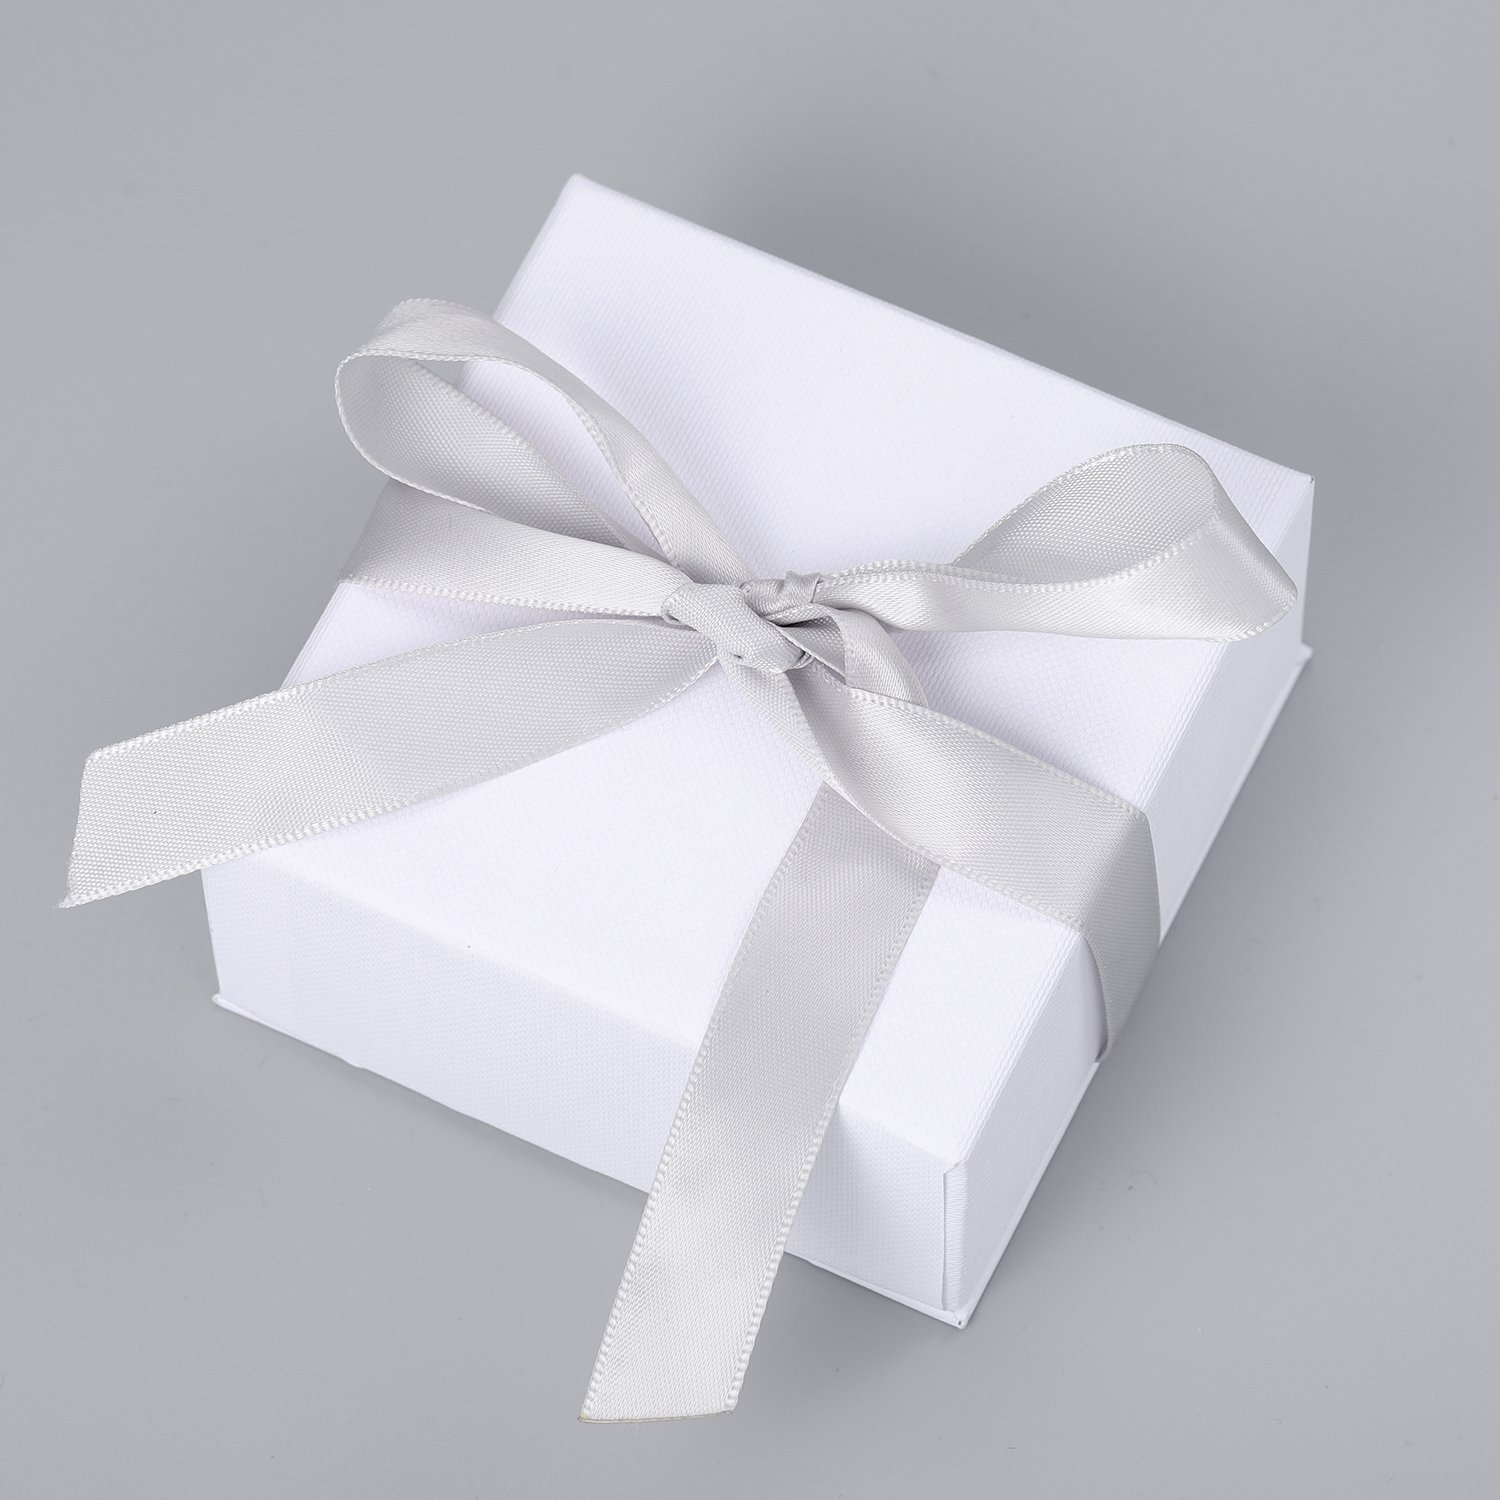 DIY Your Gift Box